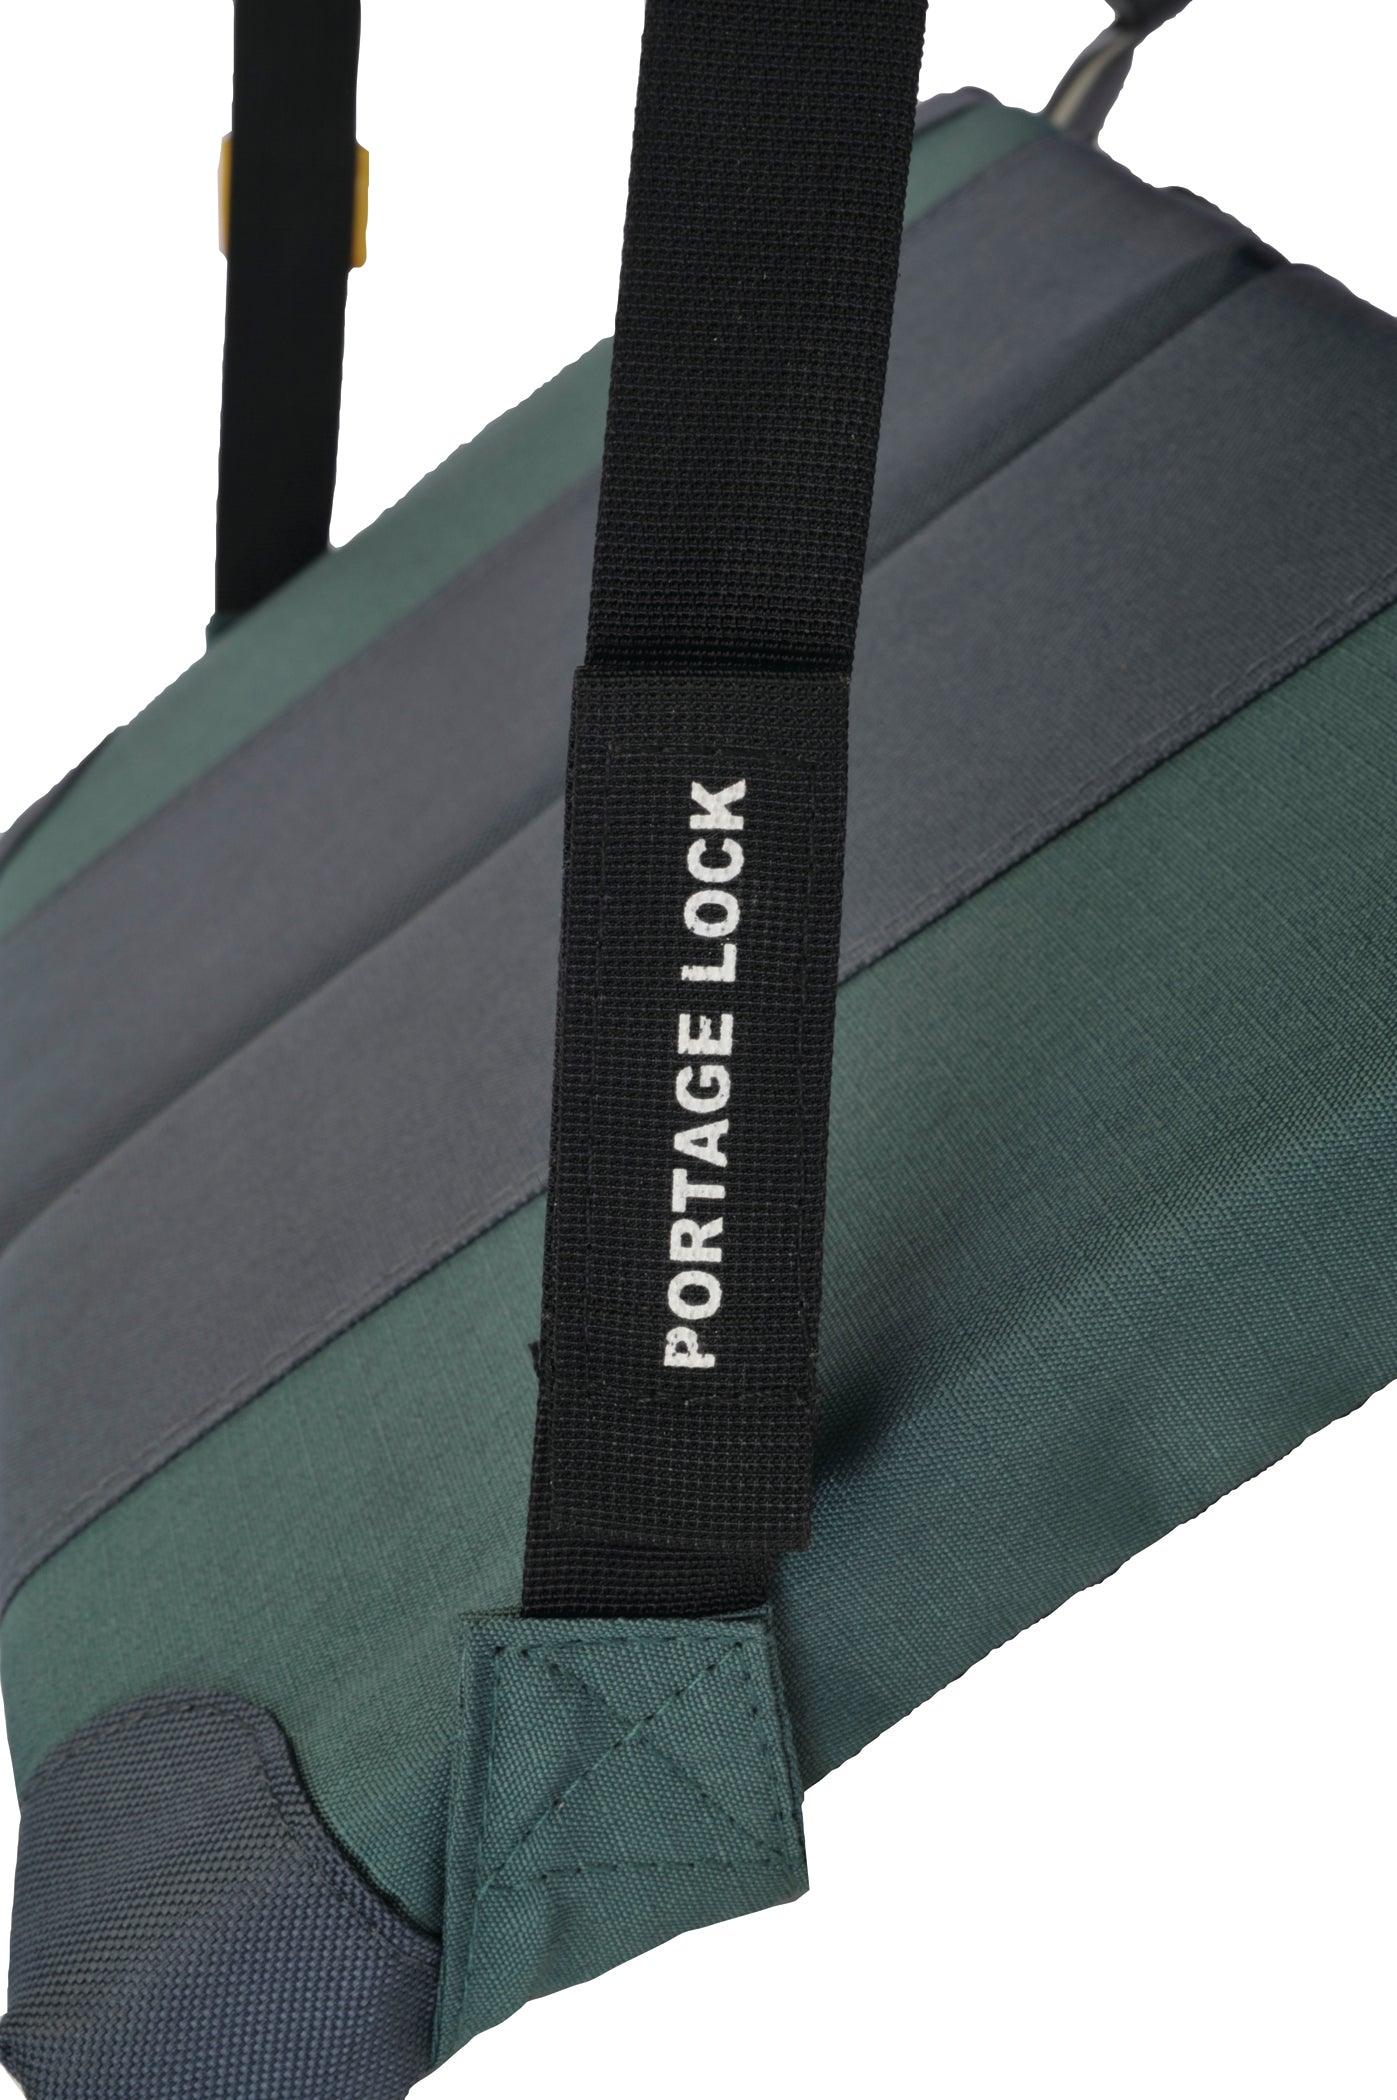 GCI Outdoor SitBacker Adjustable Canoe Seat with Back Support - TRAPSKI, LLC